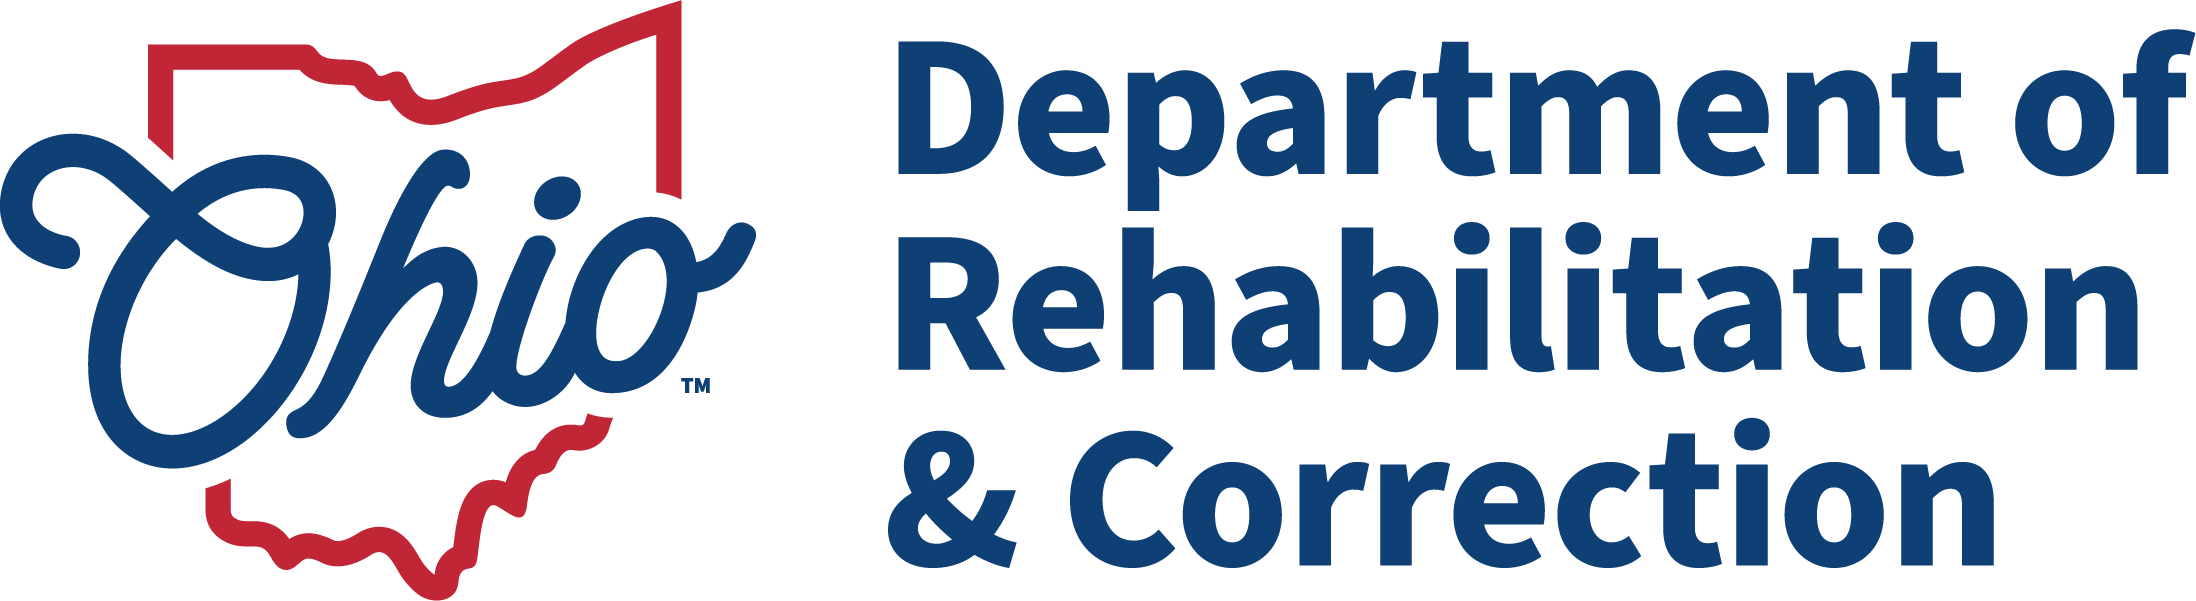 Ohio Department of Rehabilitation & Correction logo.